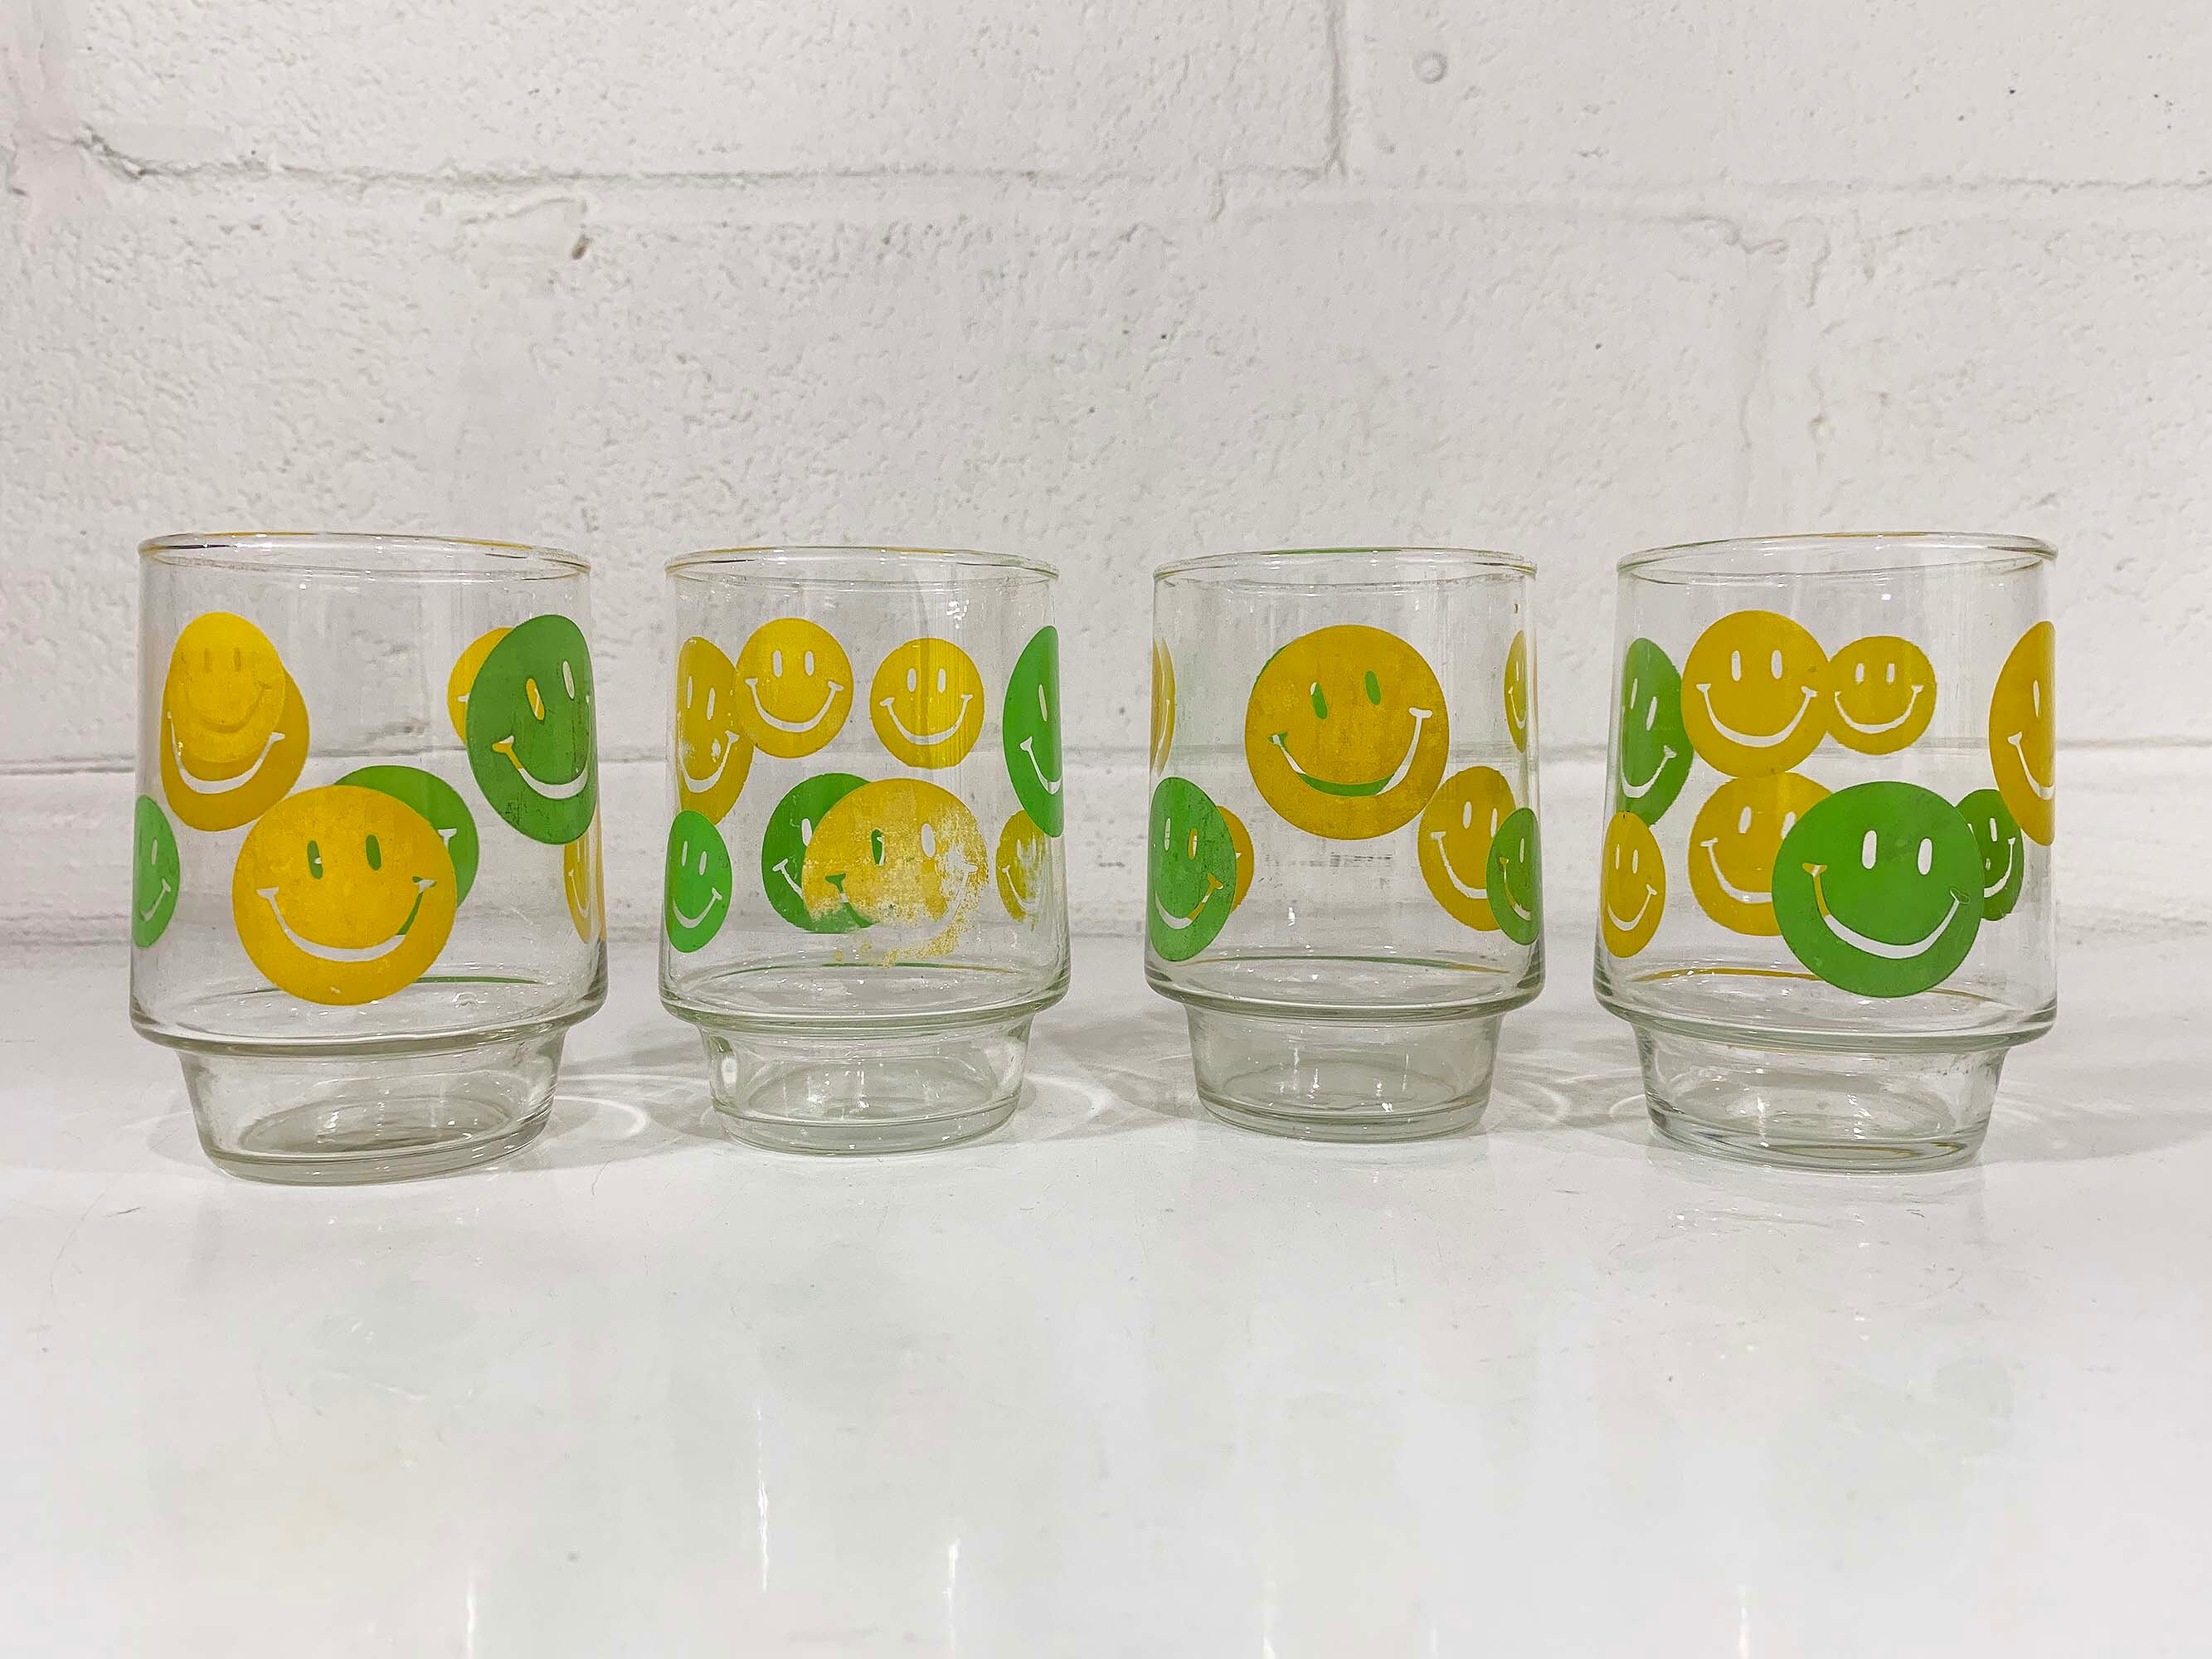 Vintage Libby Ribbed Design 16 oz Set of 2 Highball Drinking Glasses 5 7/8”  Tall